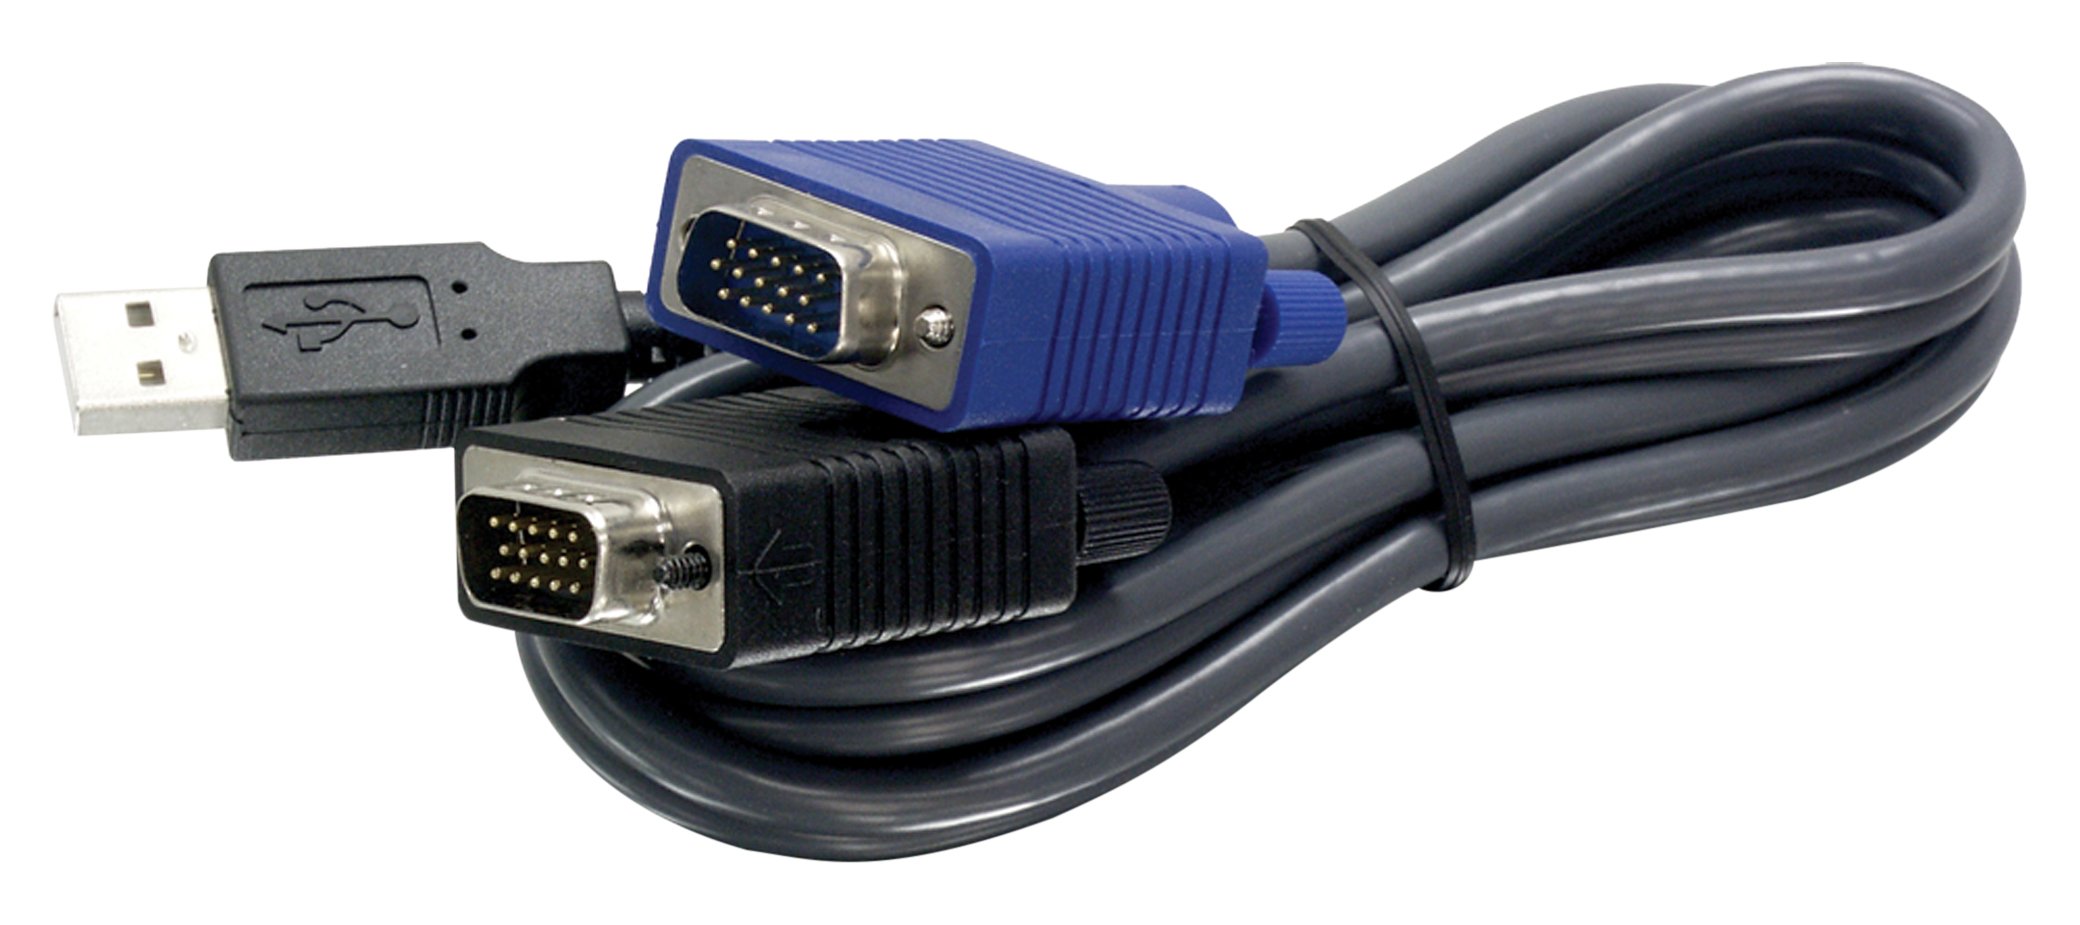 6-FEET USB KVM CABLE